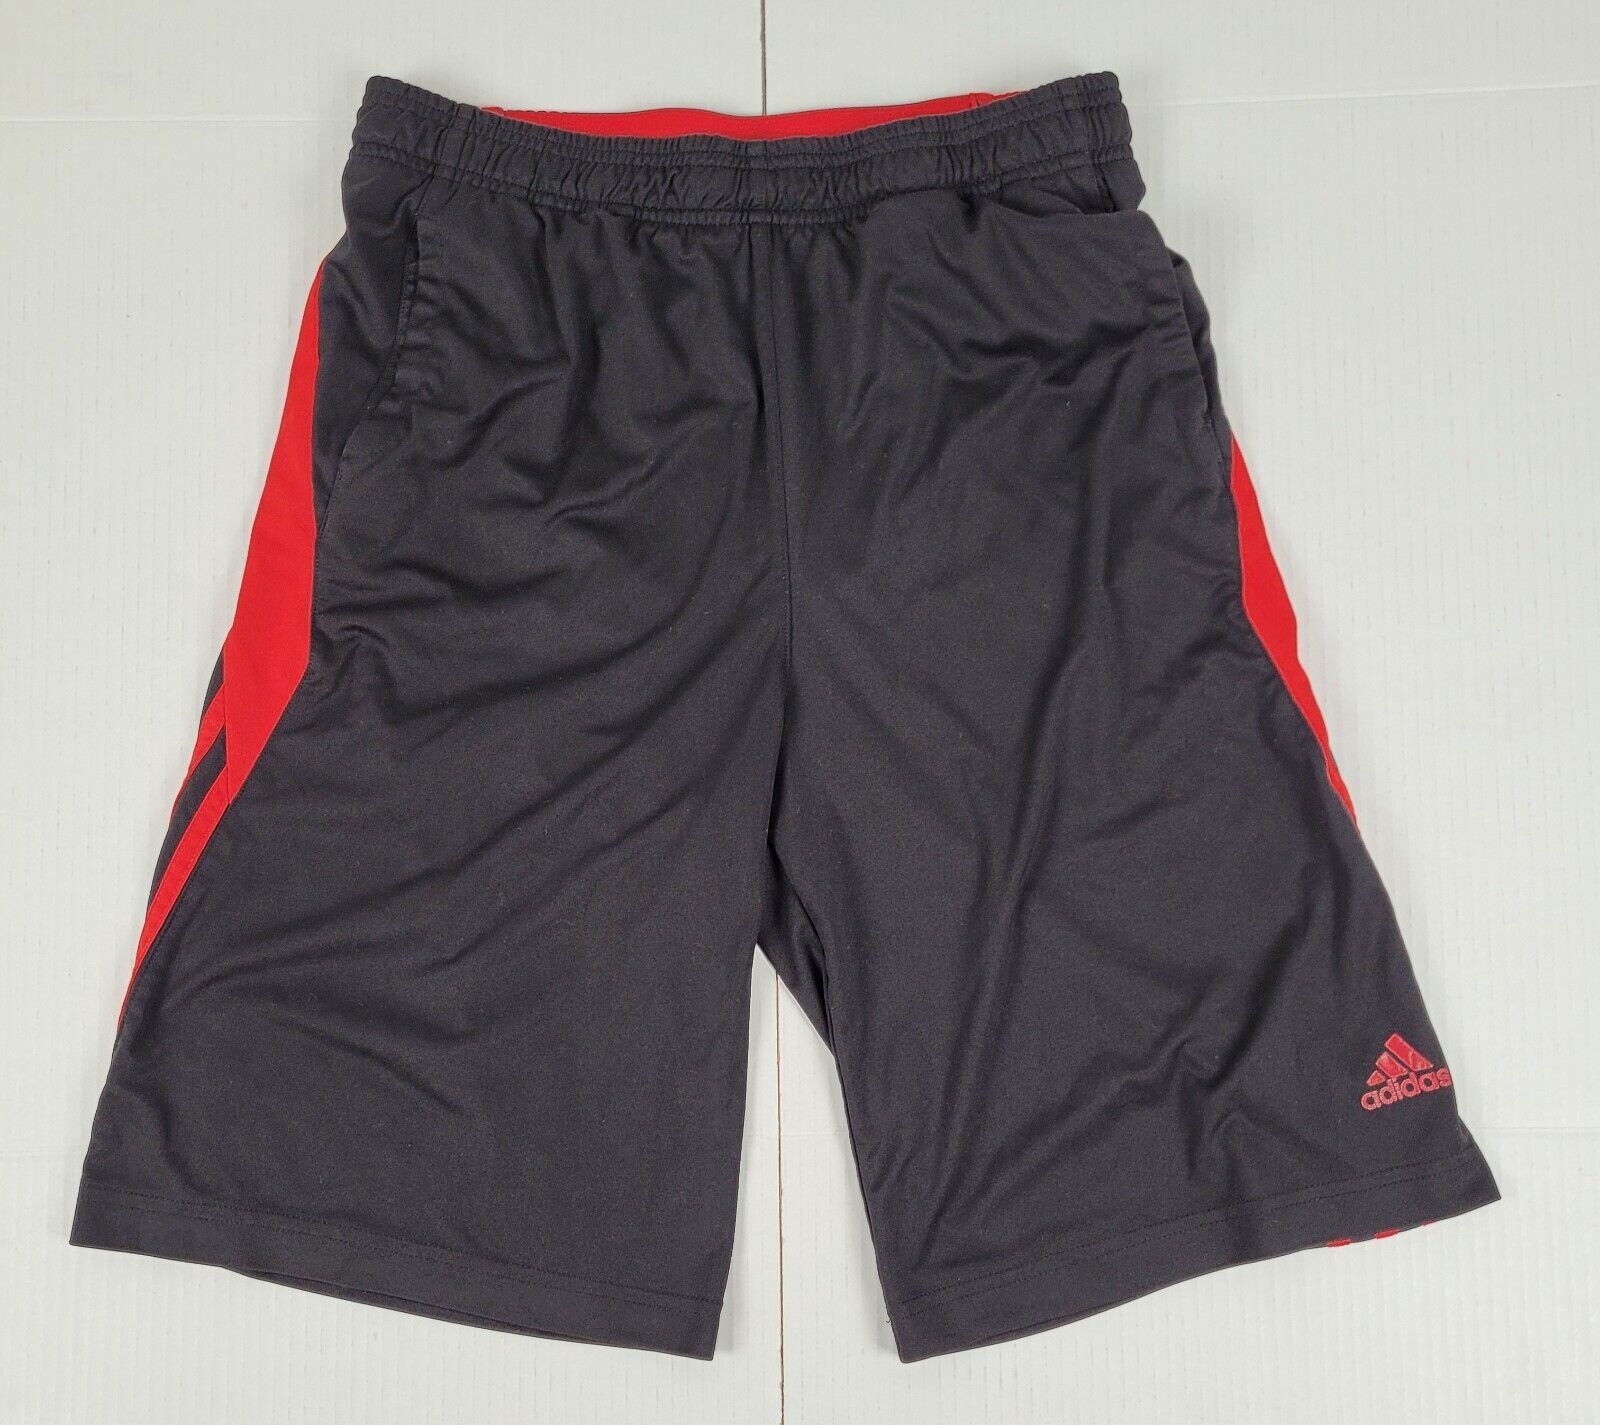 Adidas Climalite Boys Xl Black Red Drawstring Basketball Shorts